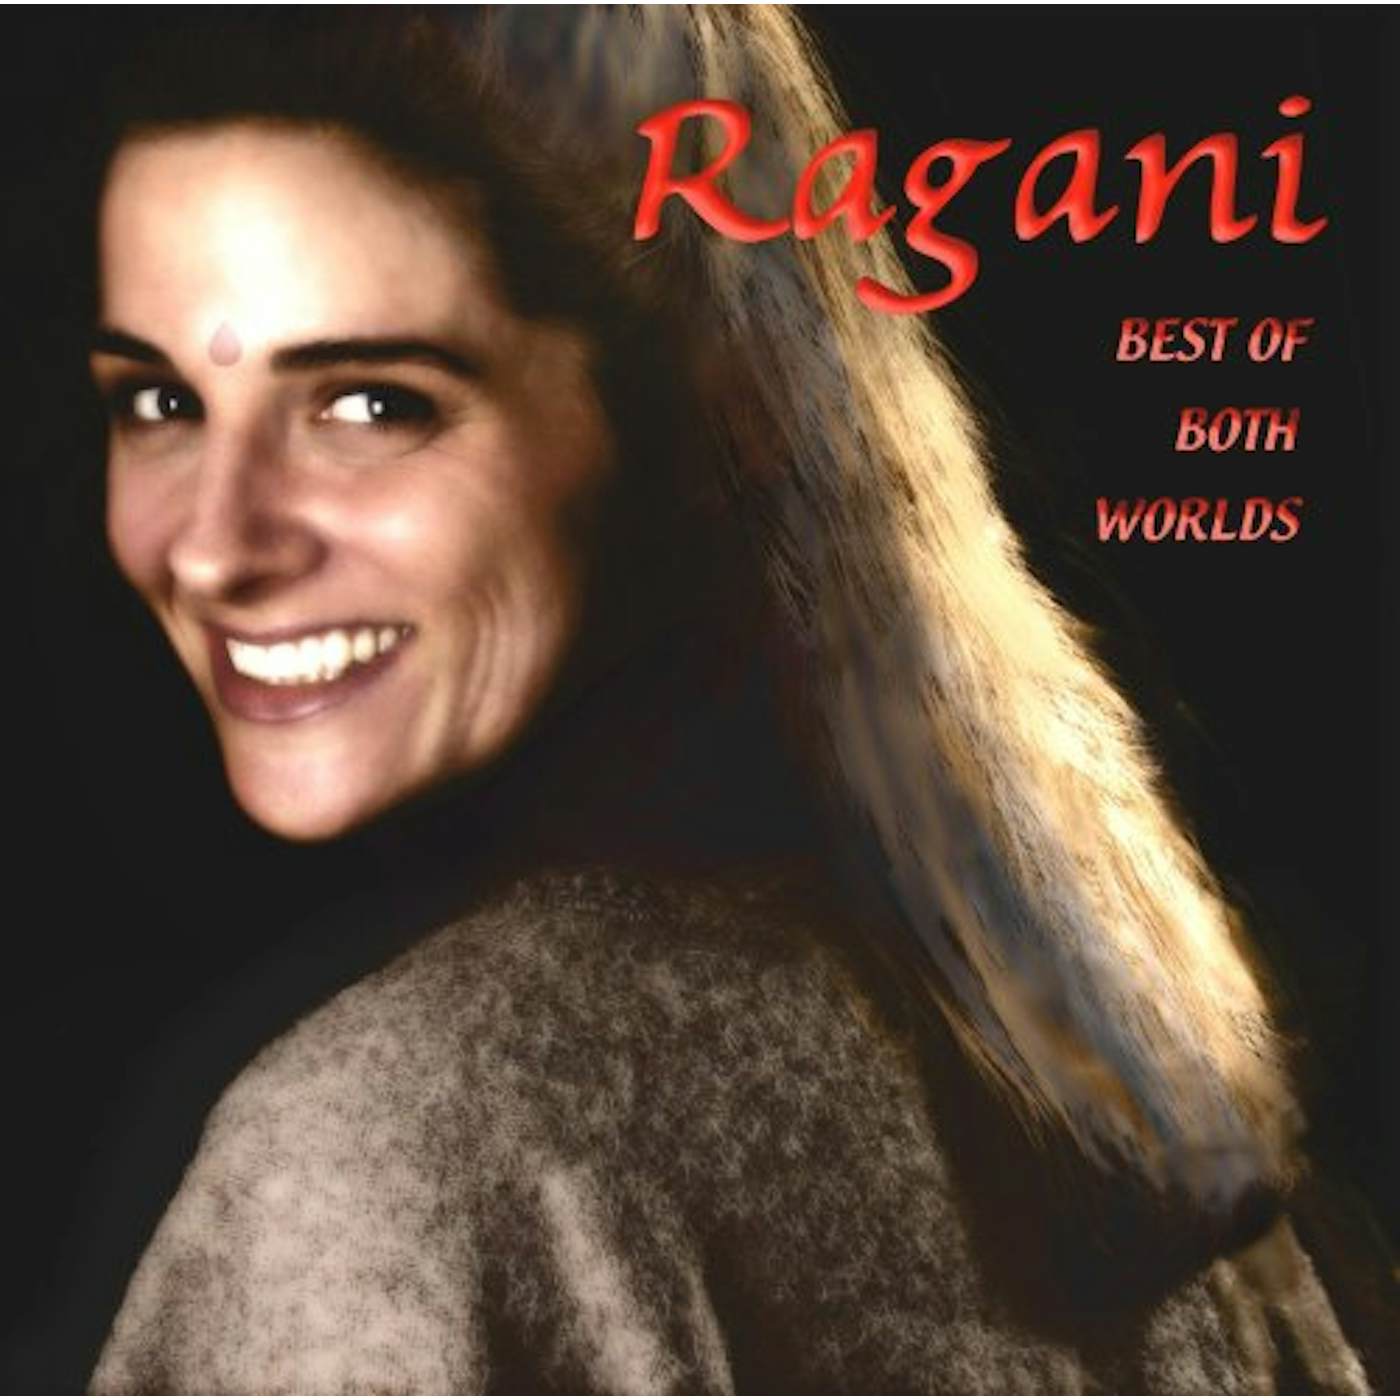 Ragani BEST OF BOTH WORLDS (KIRTAN CAFE VOL. 1) CD